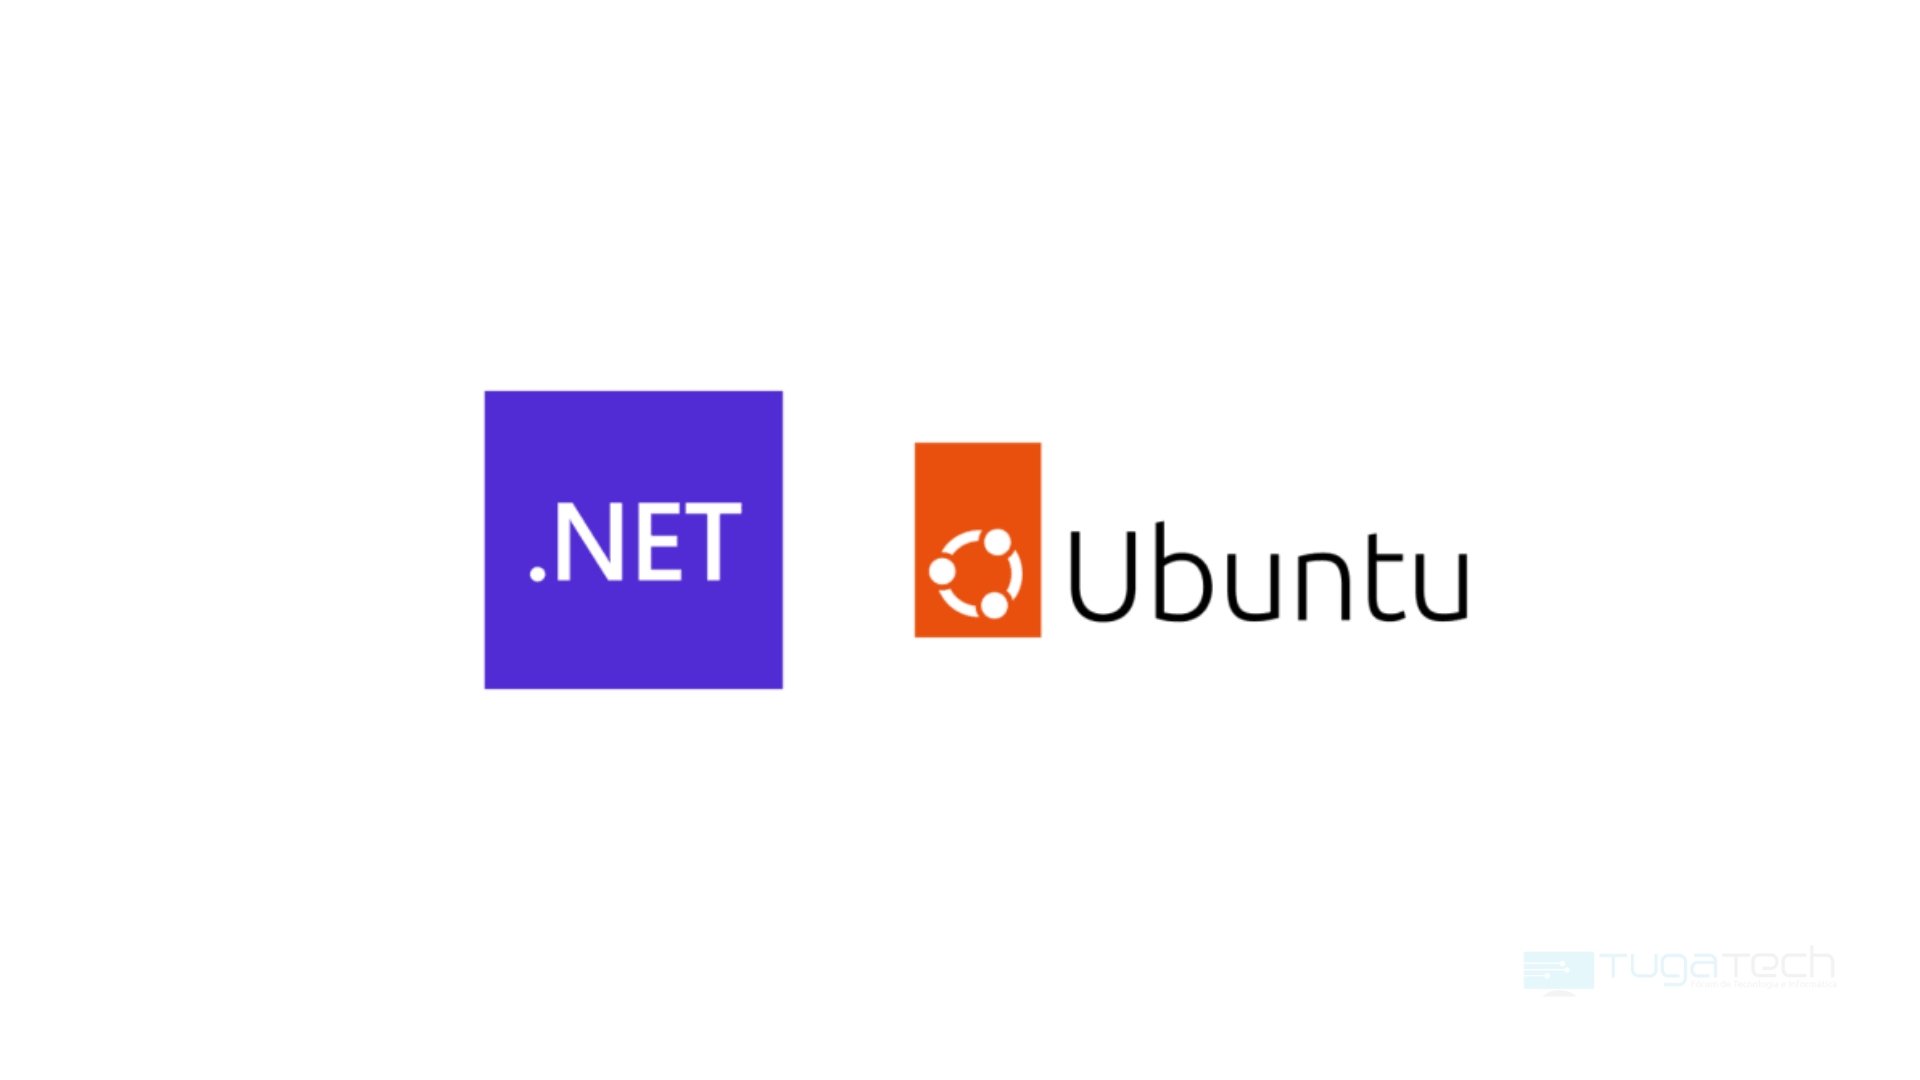 Microsoft NET e Ubuntu canonical